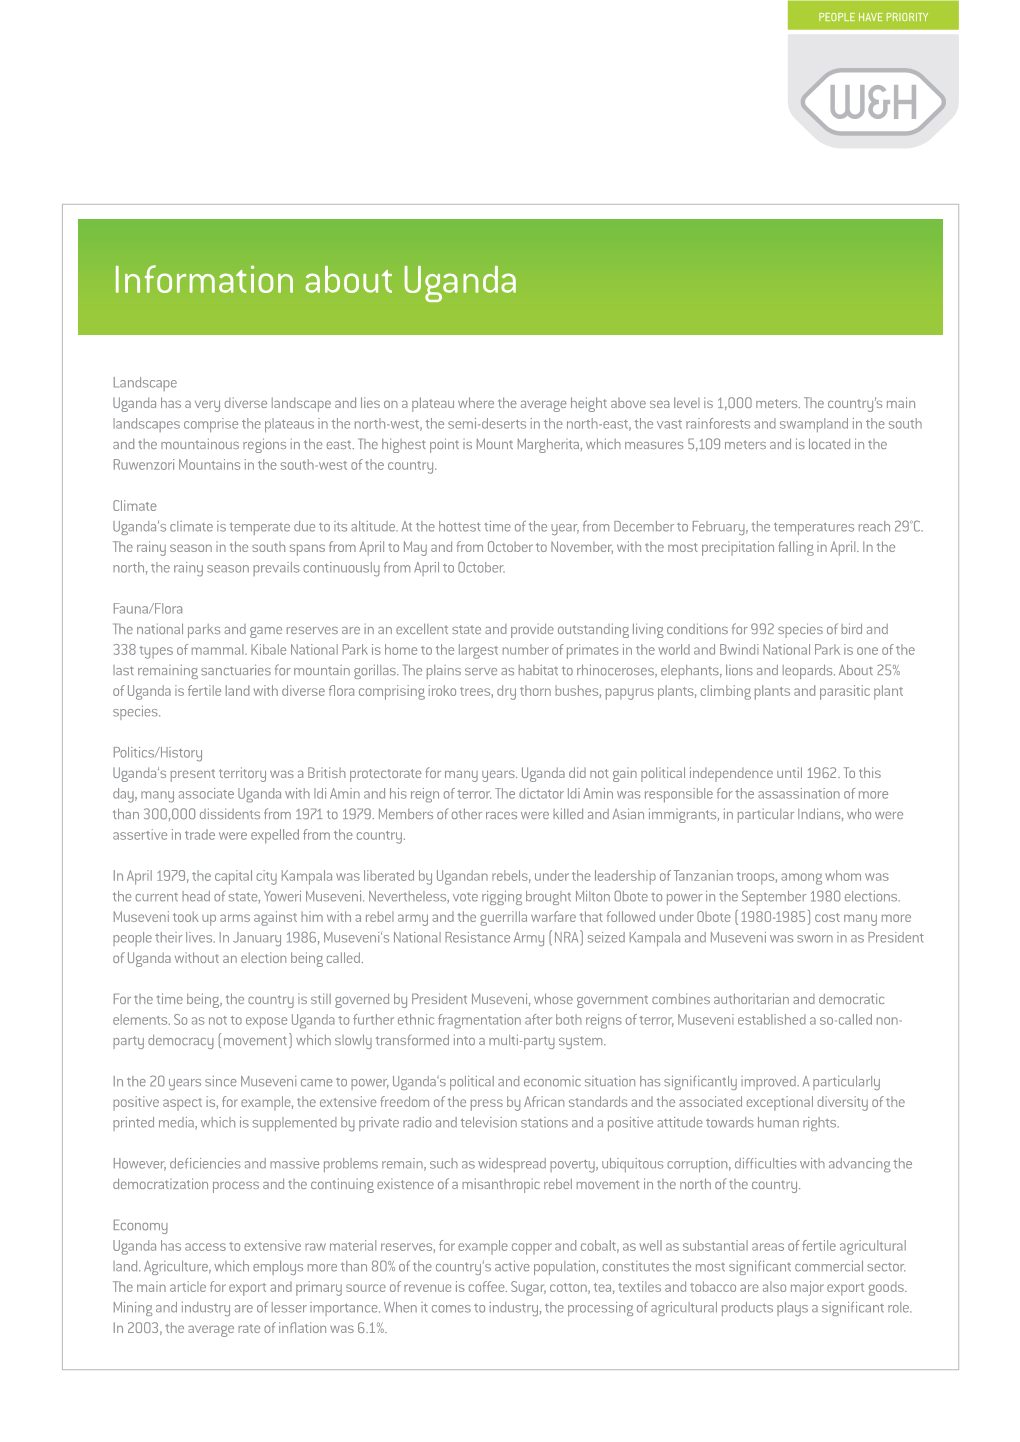 Information About Uganda